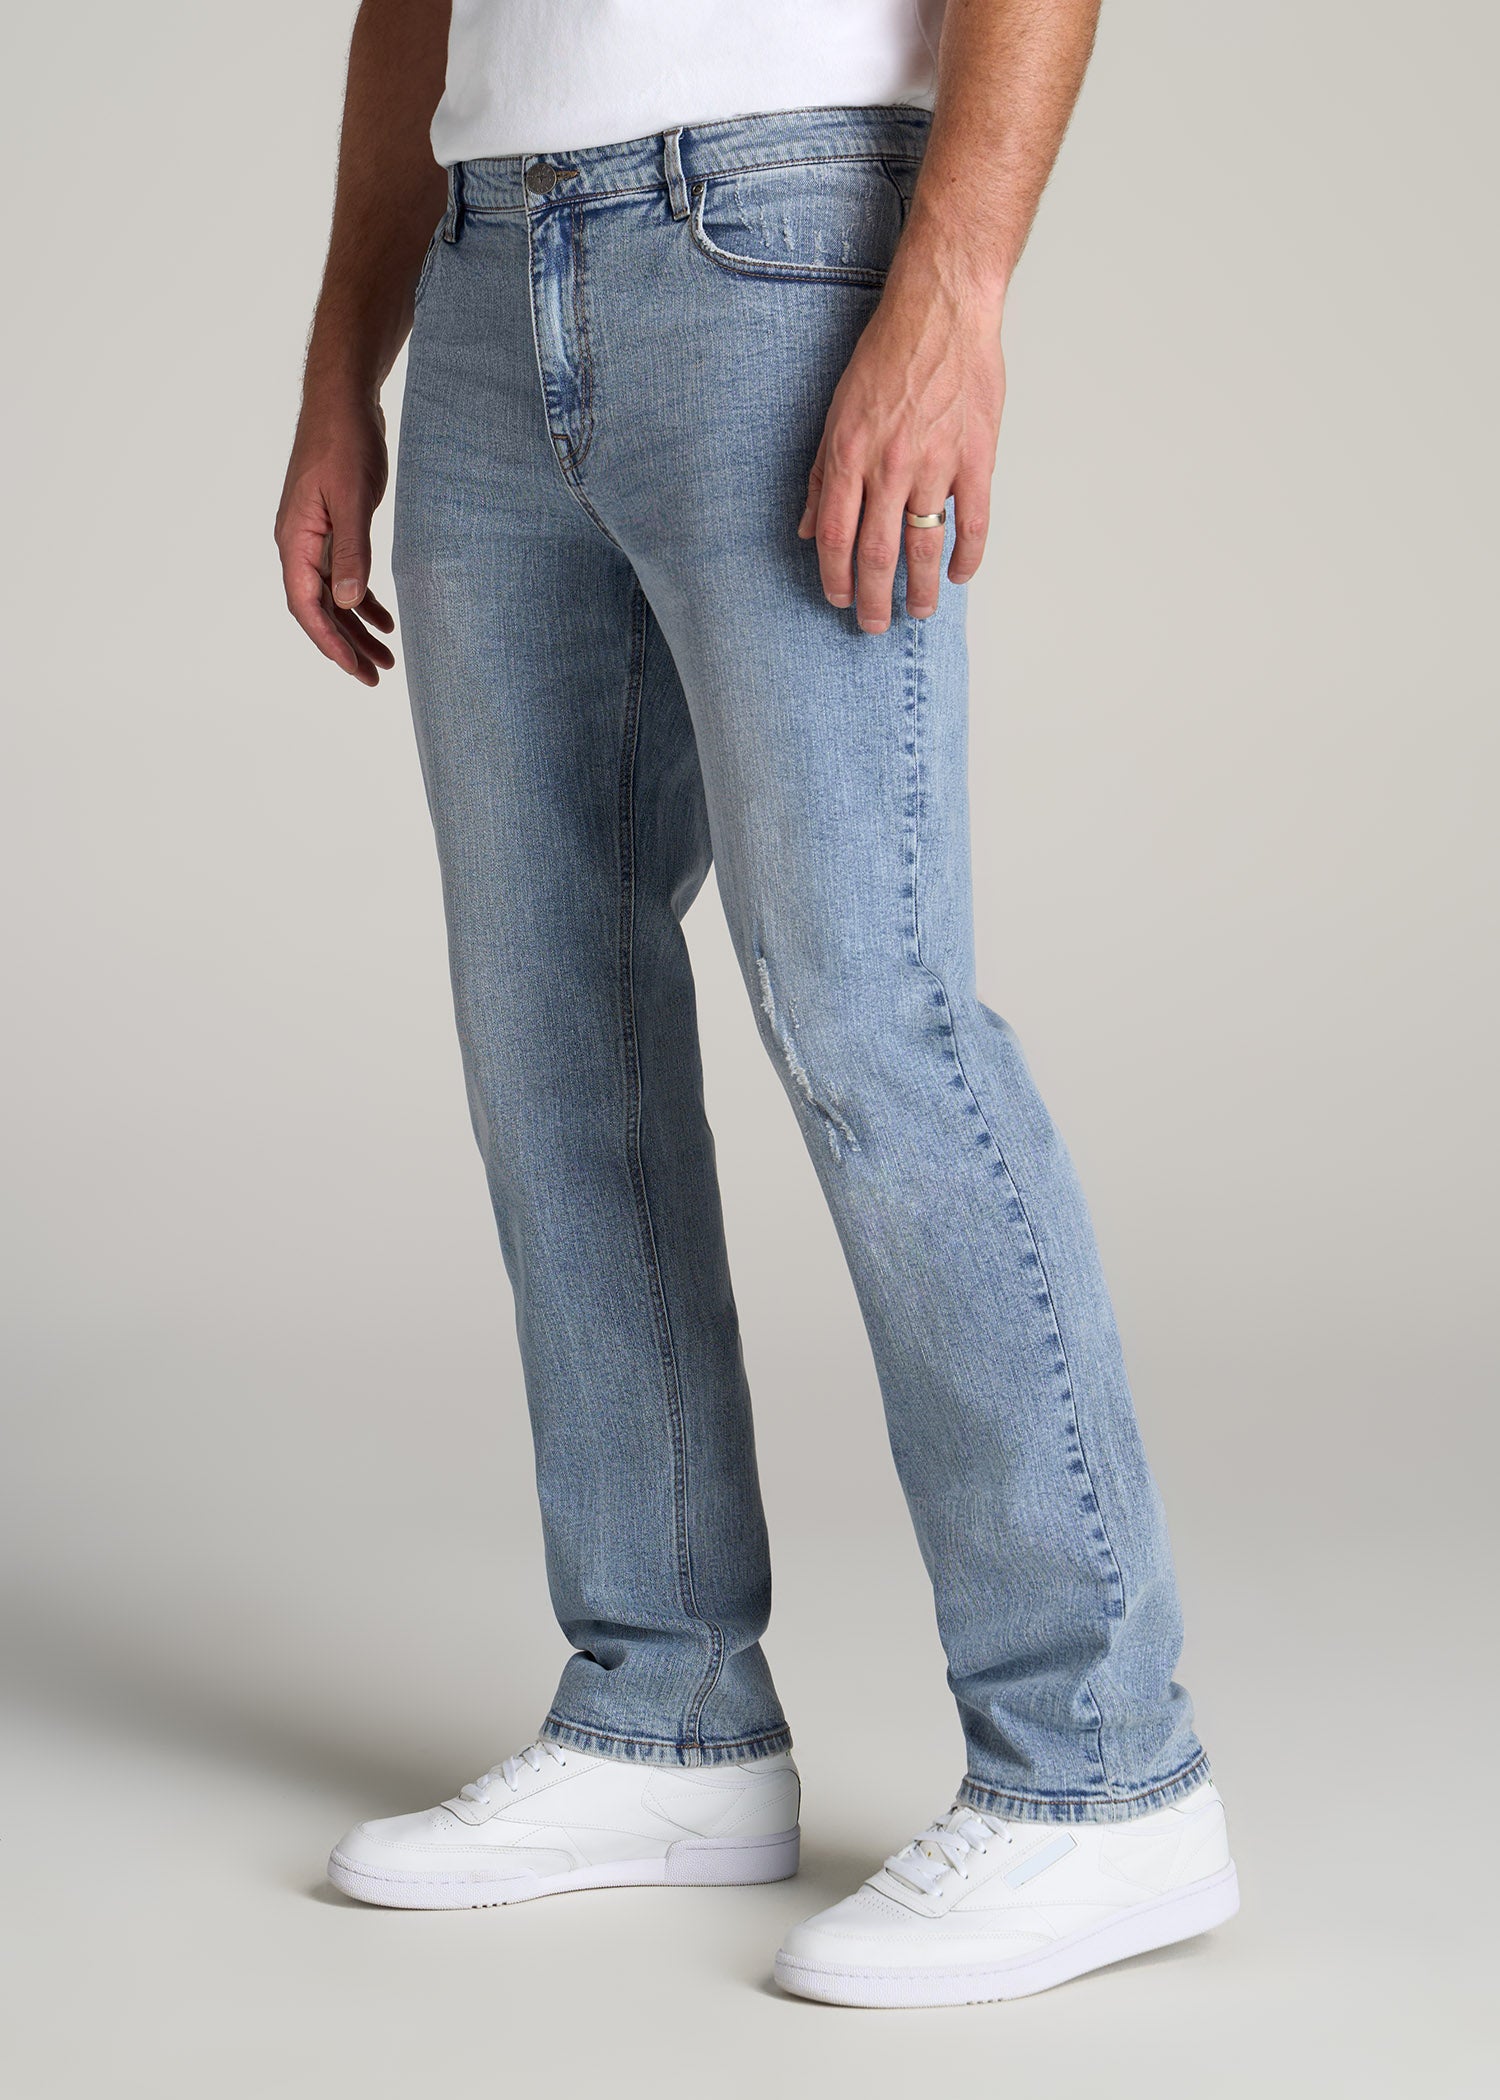 New Fade J1 Tall Men's Jeans